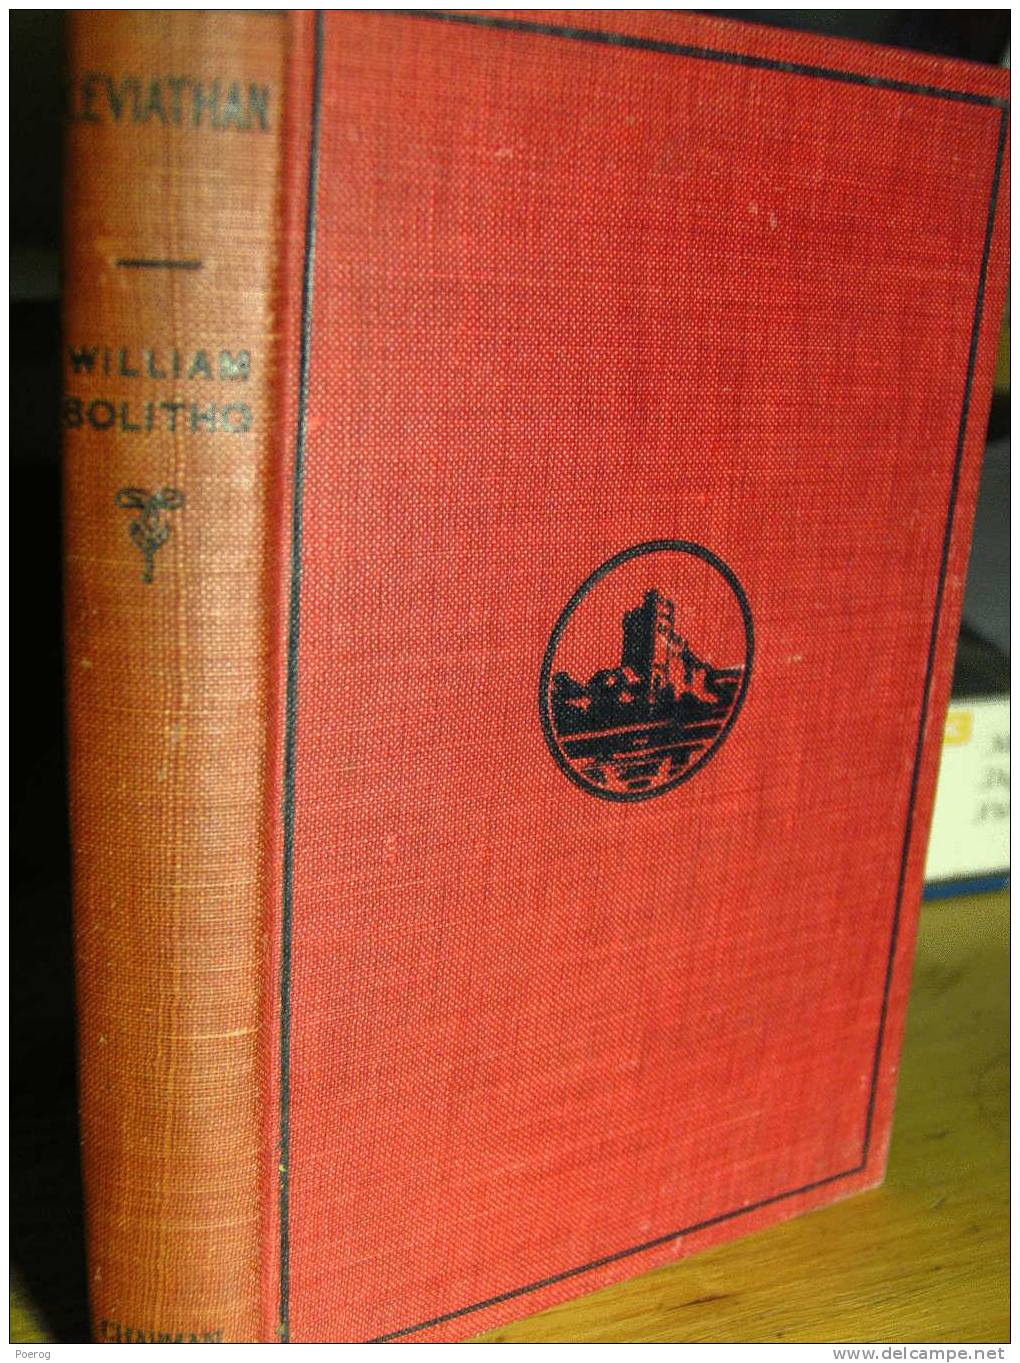 LEVIATHAN By WILLIAM BOLITHO - CHAPMAN & DODD LTD - 1923 - Fiction